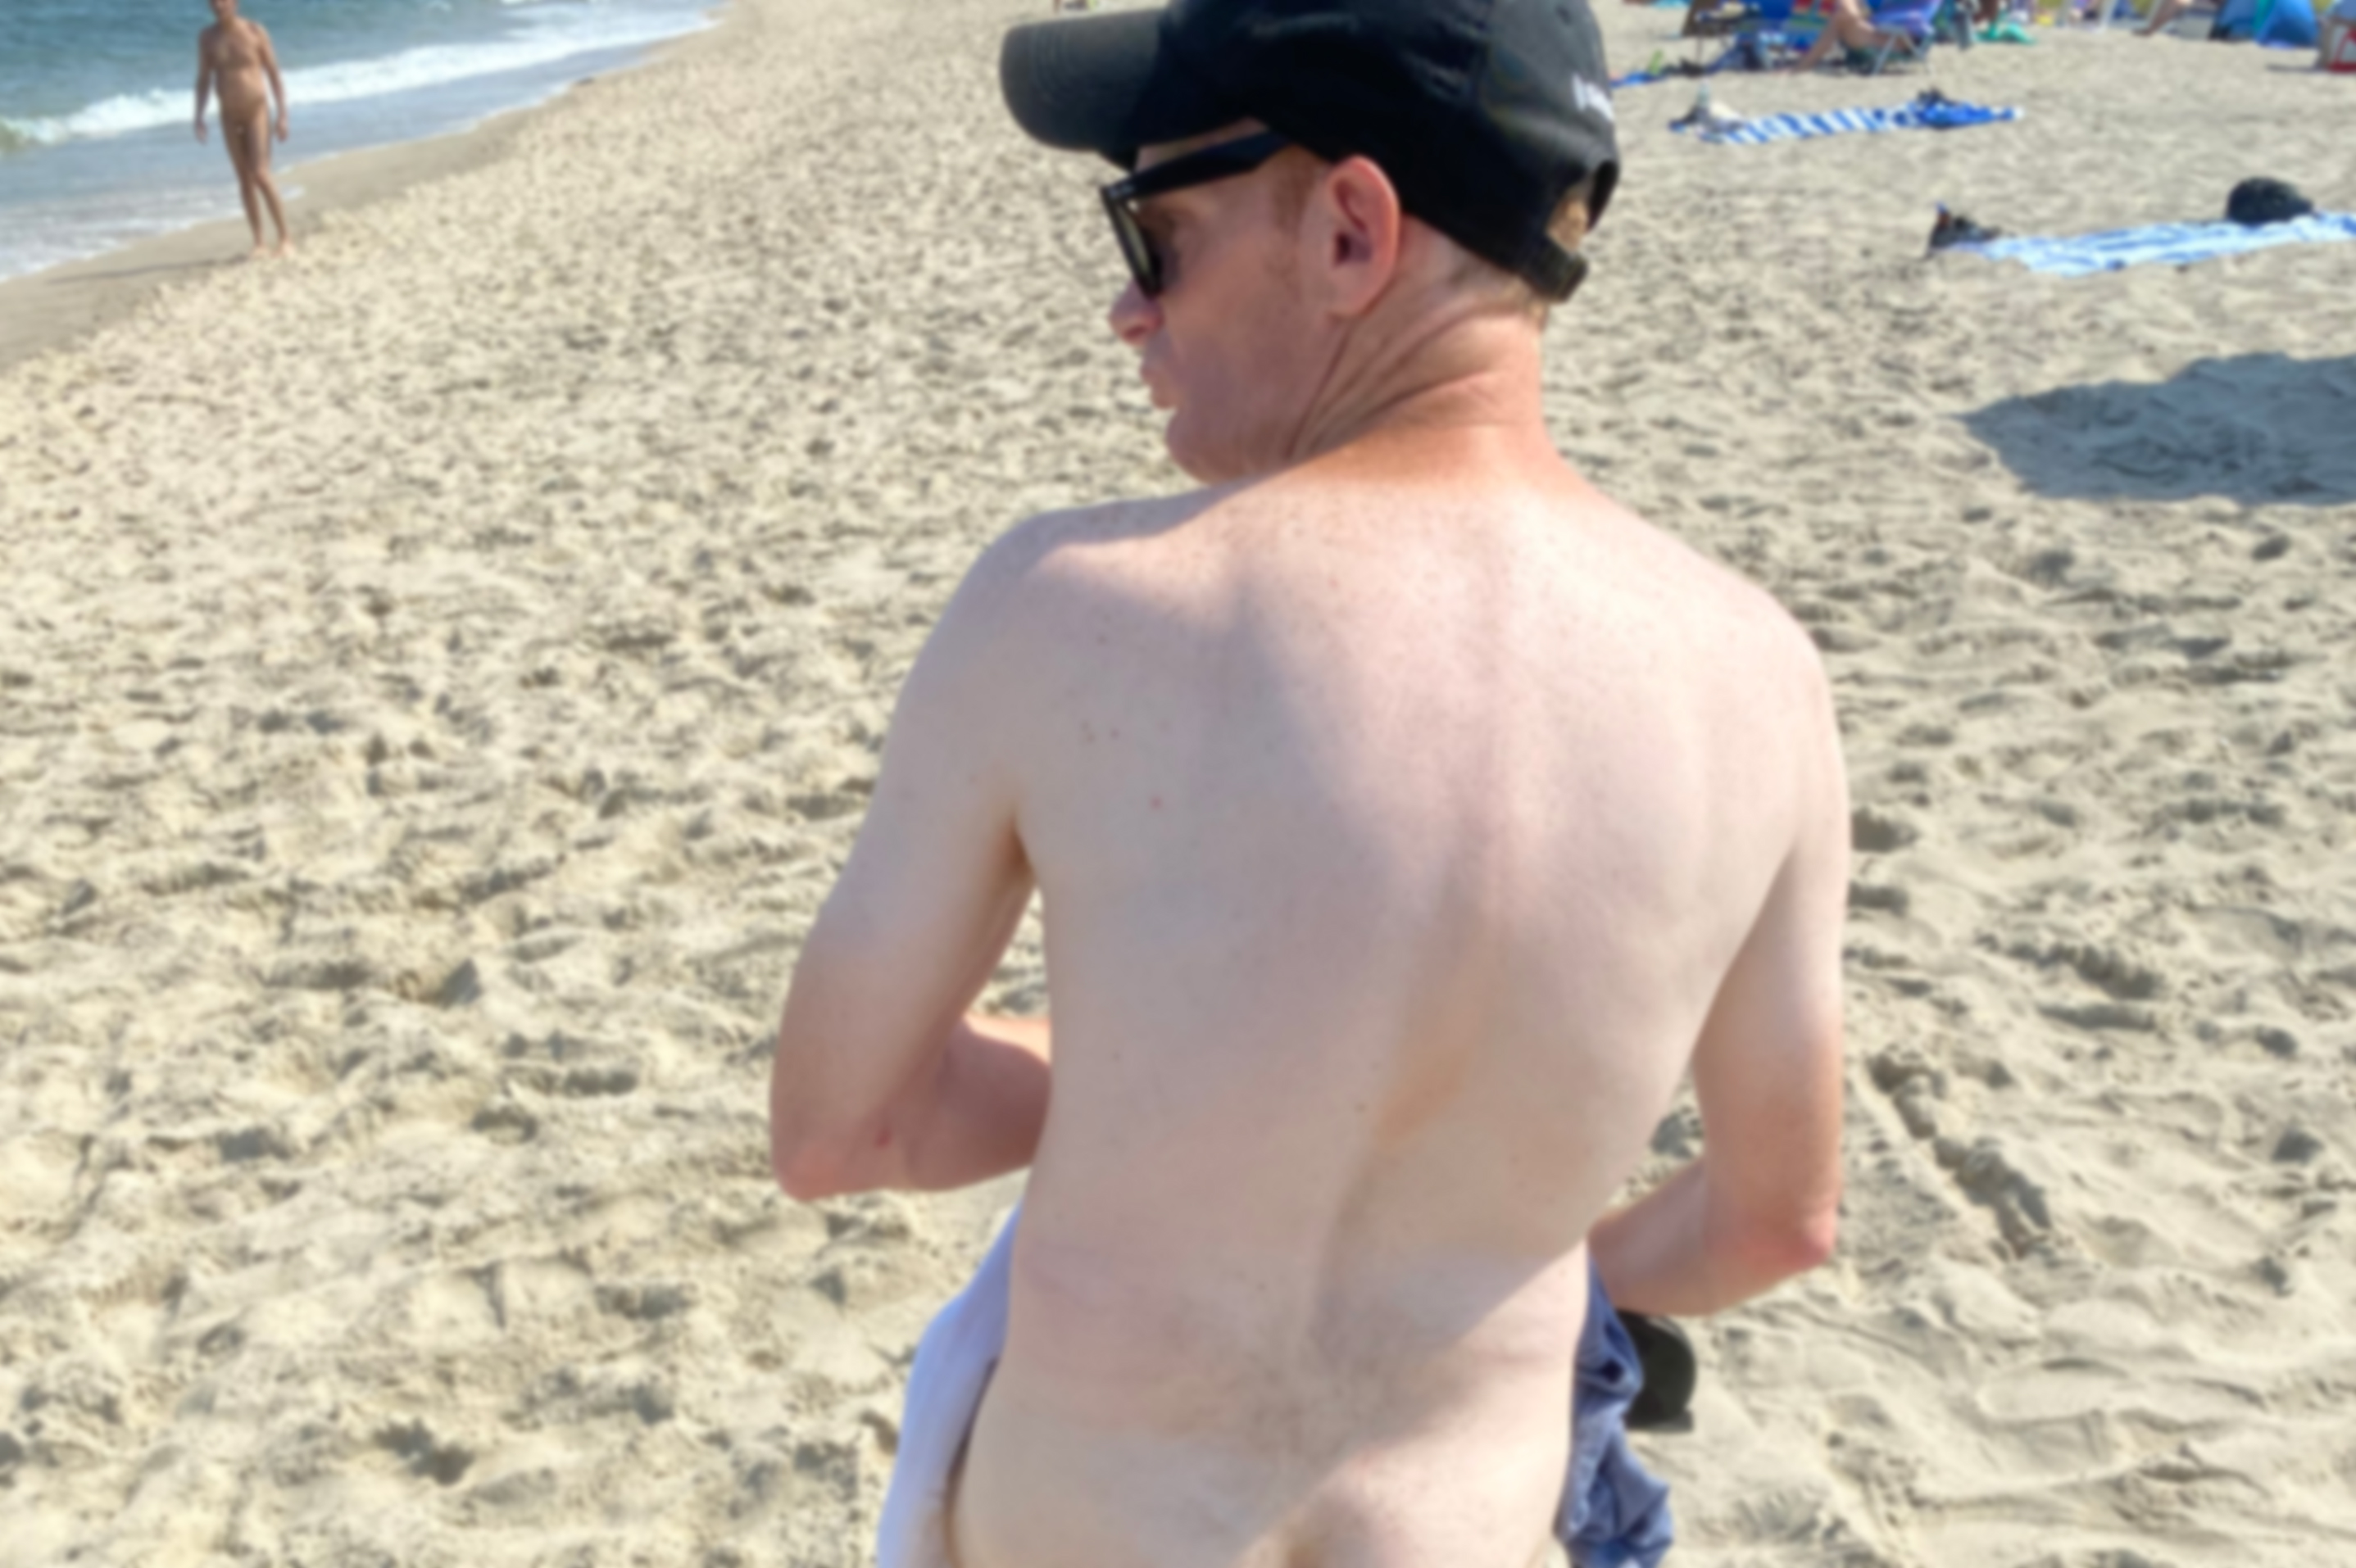 don bacon add photo black guy nude beach